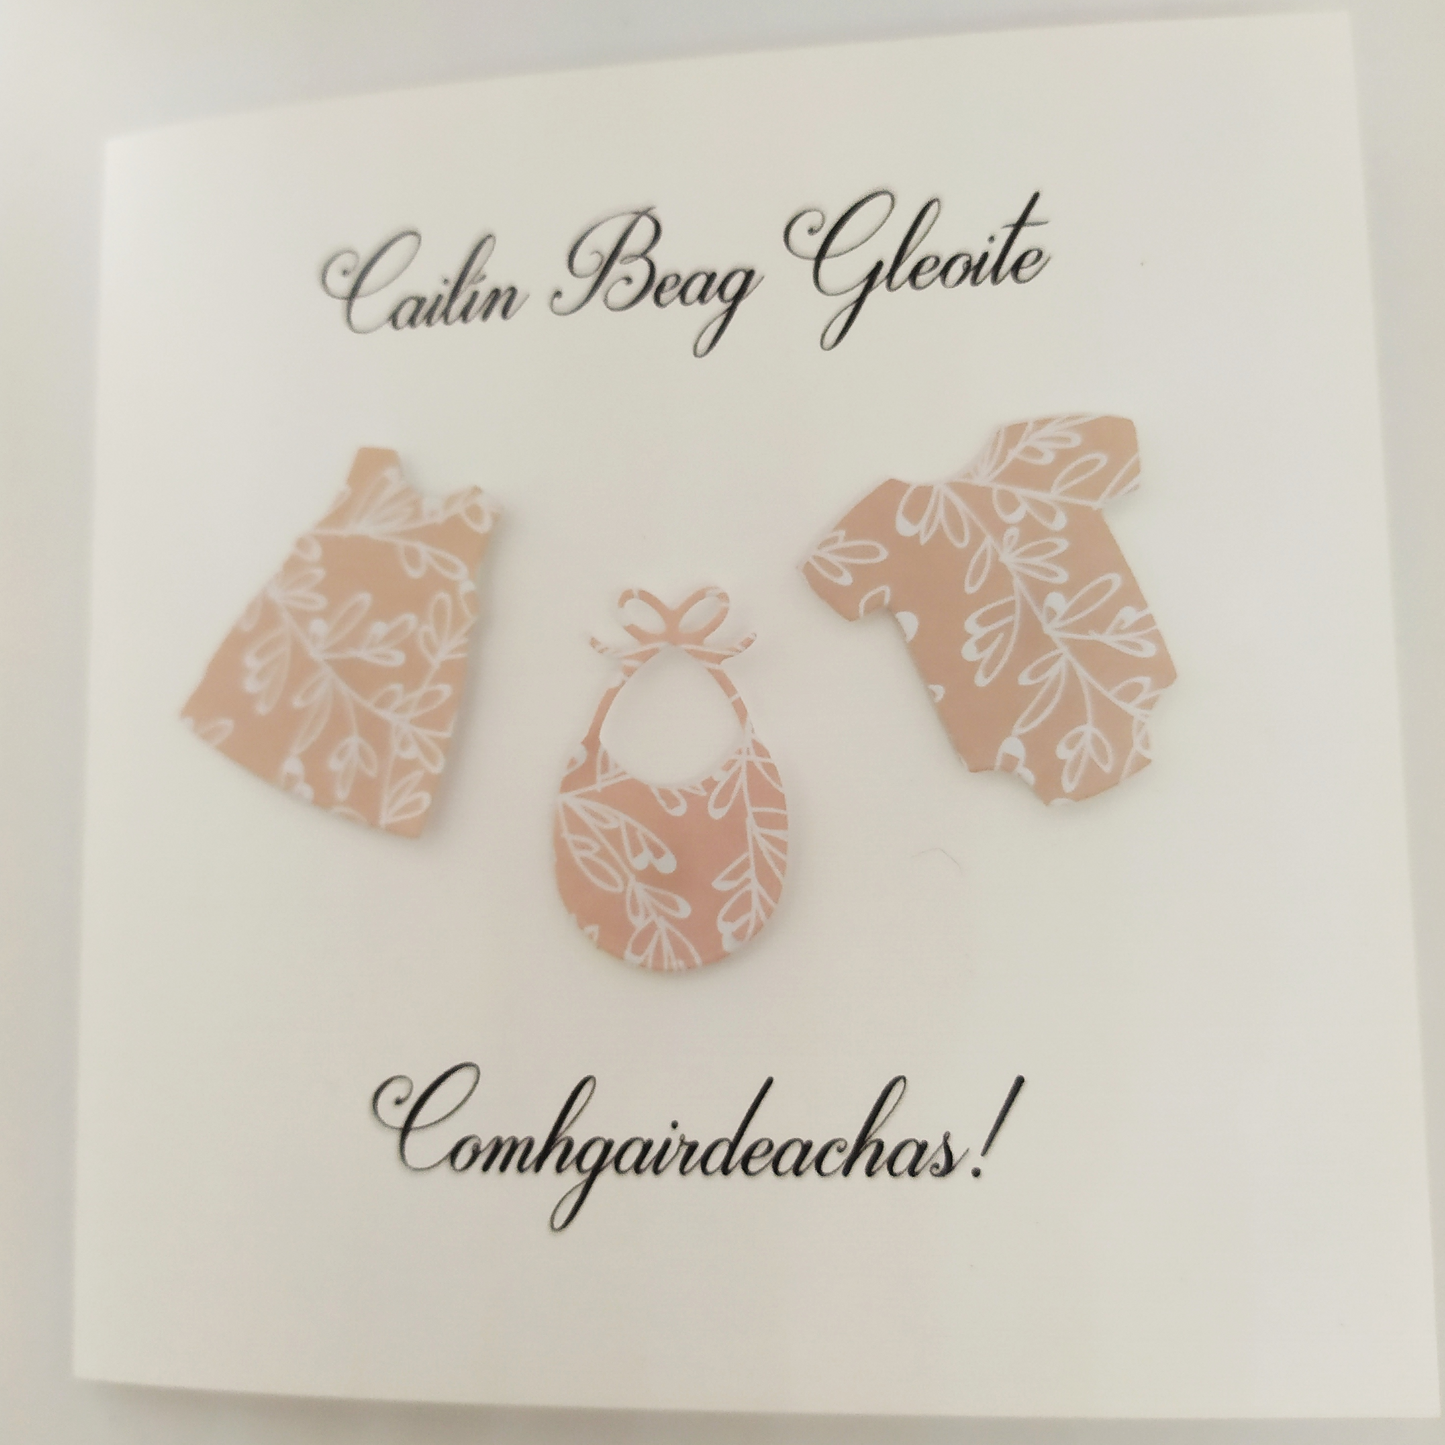 Cailin Beag Gleoite - baby card - clothes